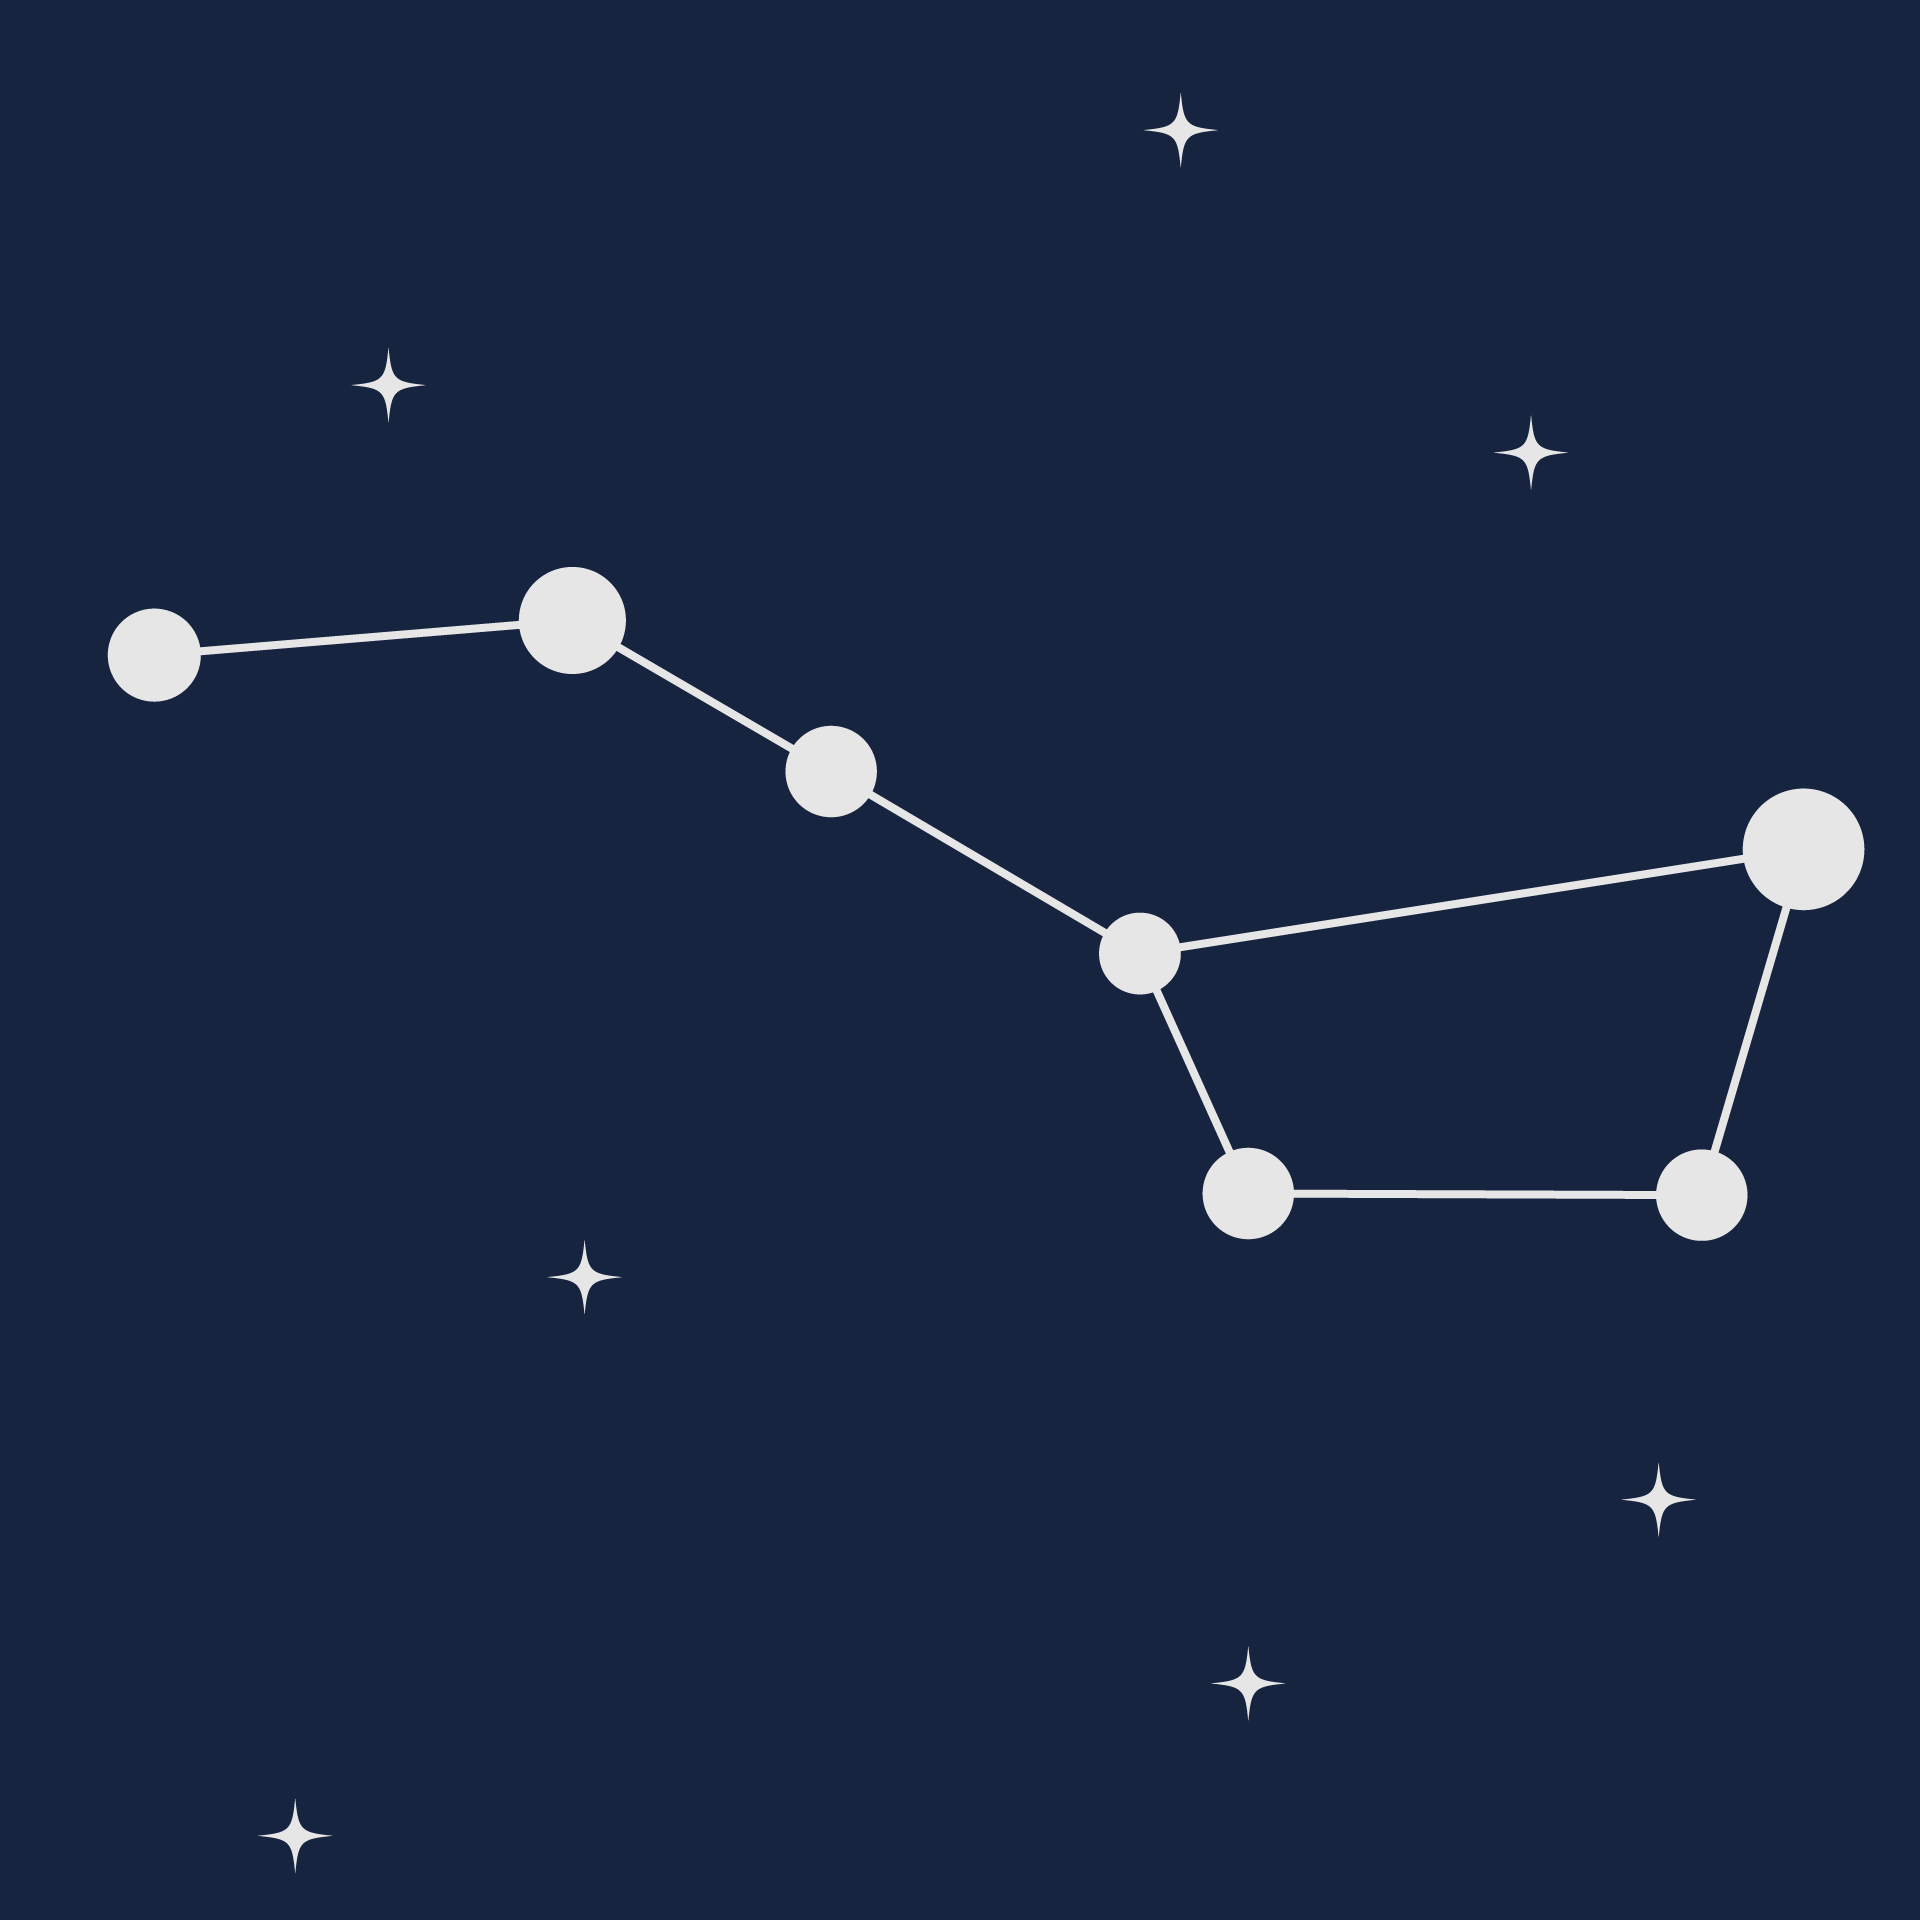 Illustration of the Plough constellation